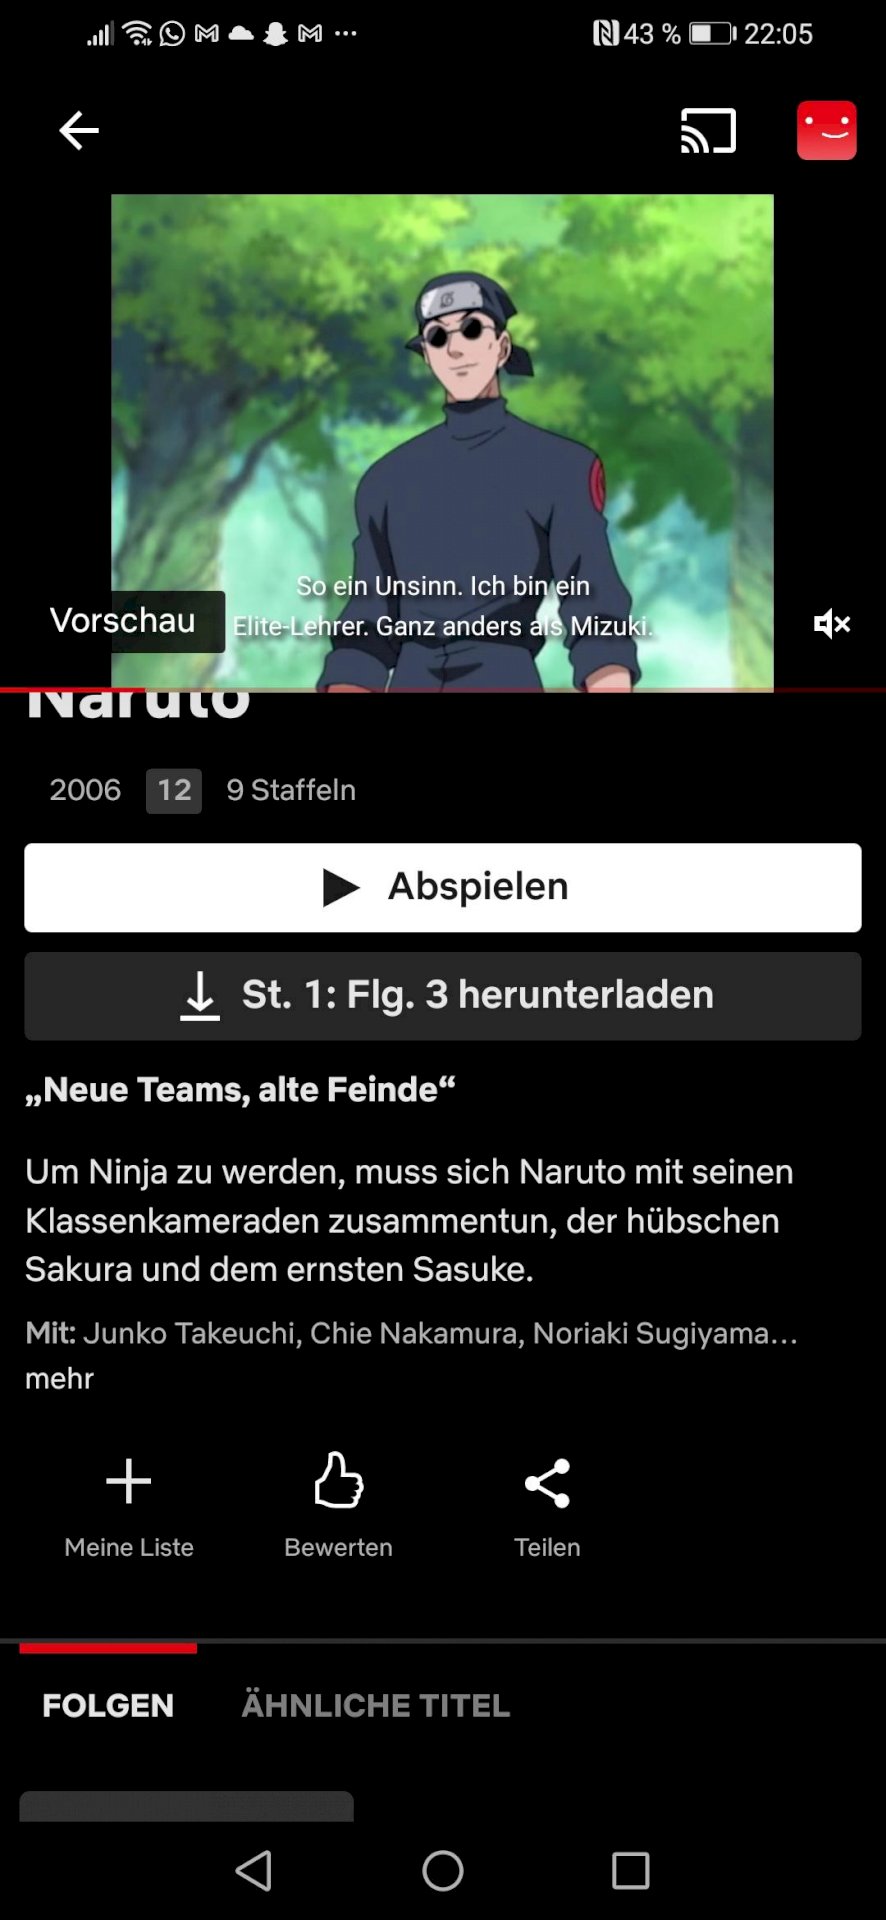 Netflix Naruto completely